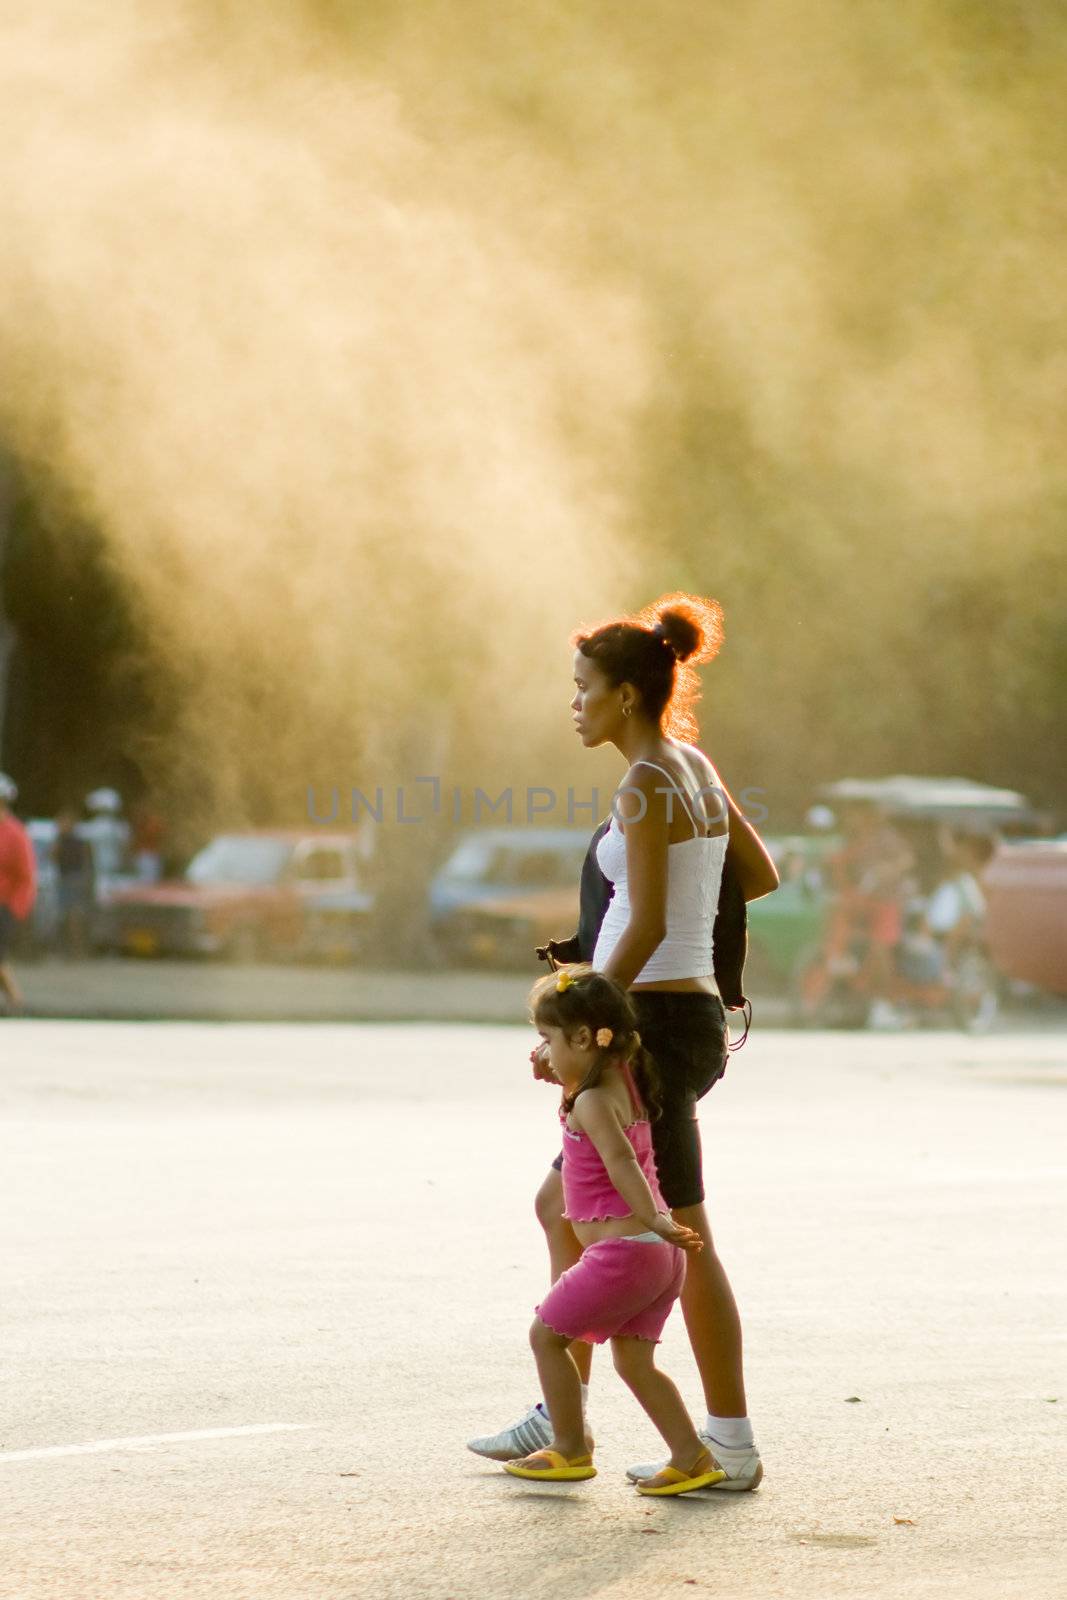 Little girl with mother in city smog. January 2008, Havana, Cuba.